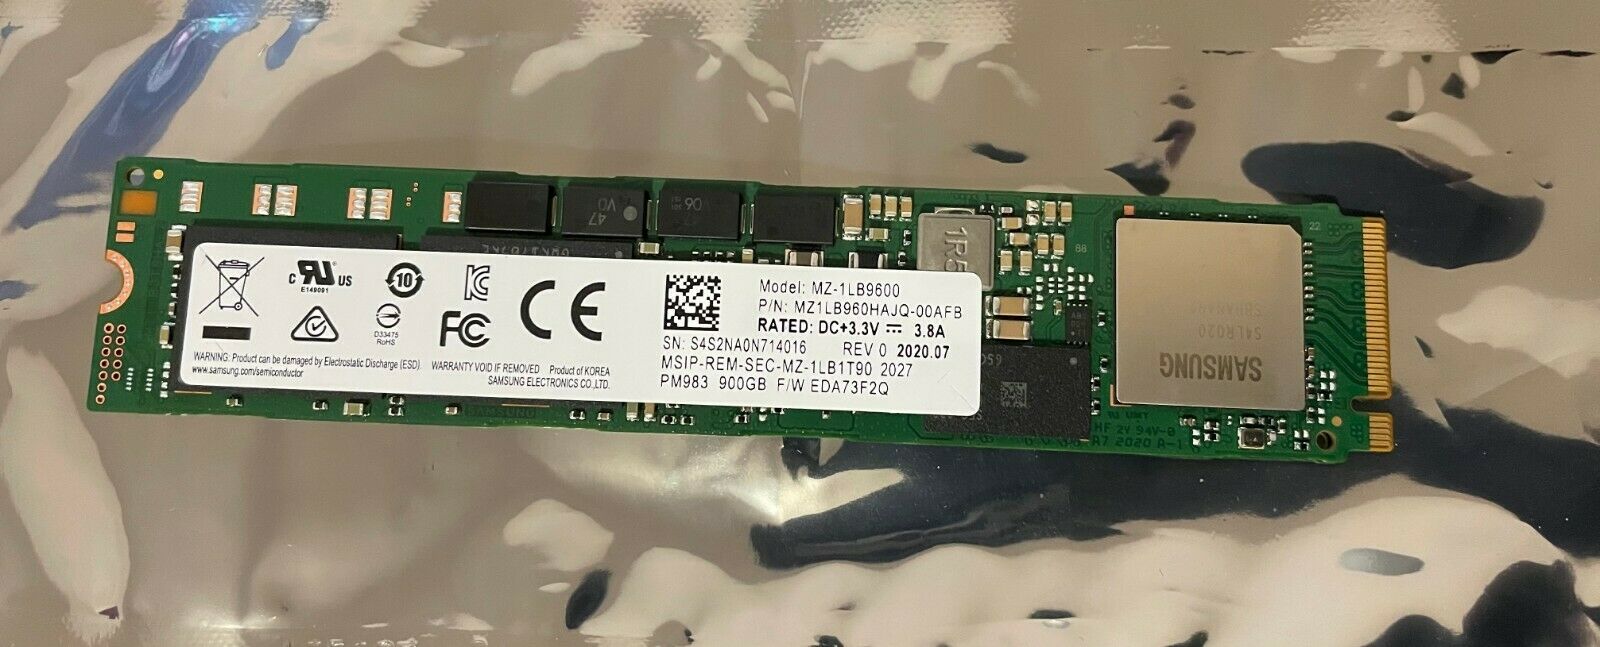 Samsung 900GB MZ-1LB9600 PM983 Series M.2 22110 NVMe Pcie 3.0x4 Enterprise (SSD) Solid State Drive